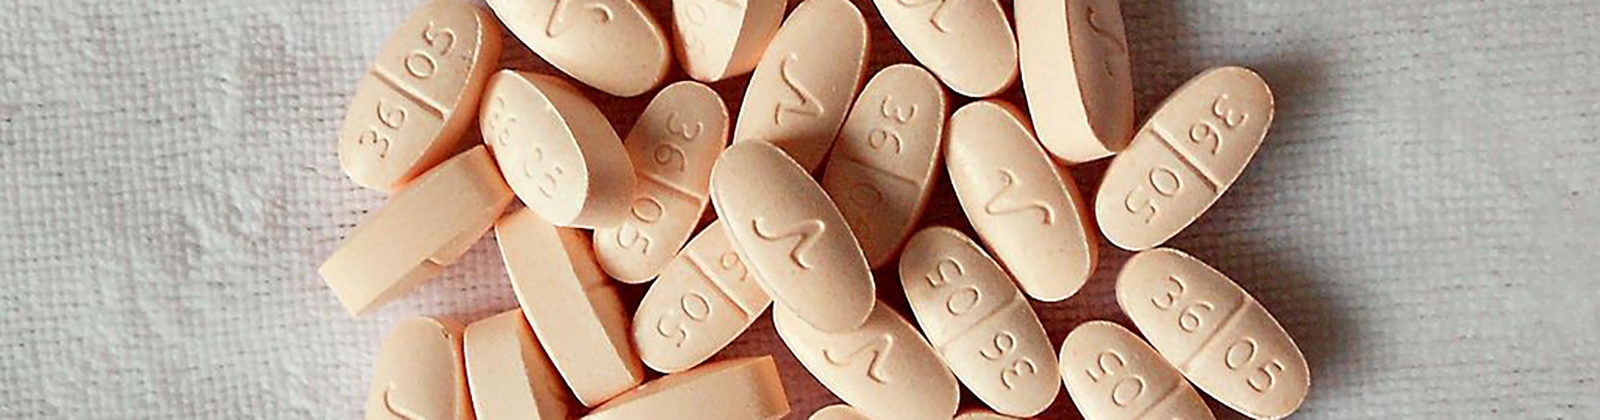 Hydrocodone pills for pain or cannabis treatment.